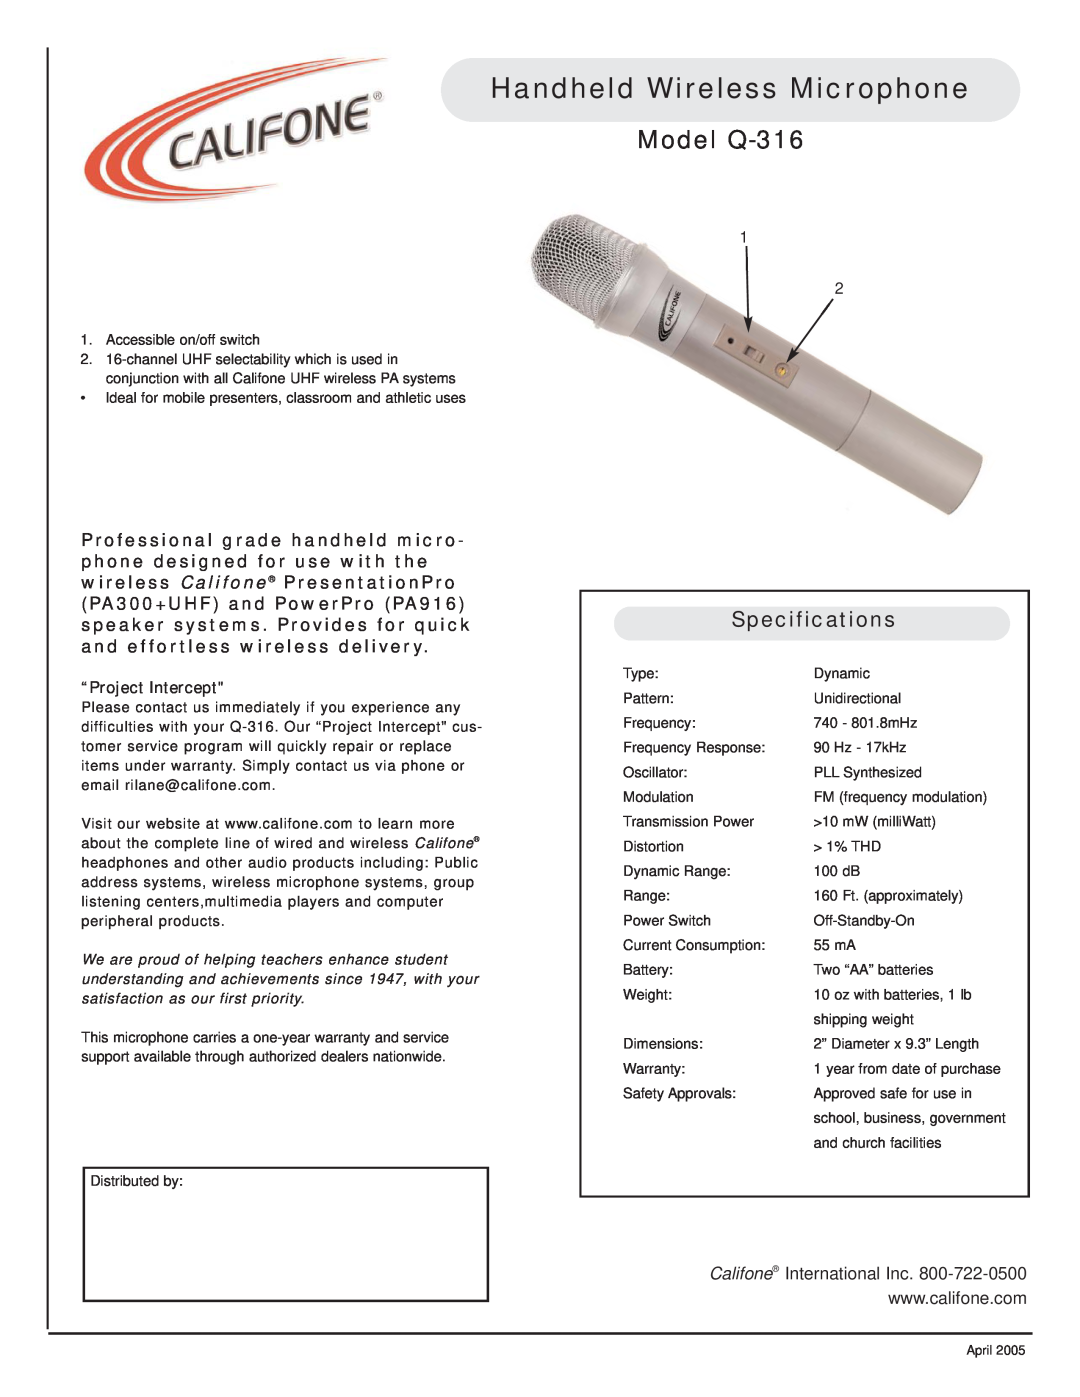 Califone specifications Handheld Wireless Microphone, Model Q-316, Specifications, Califone International Inc 